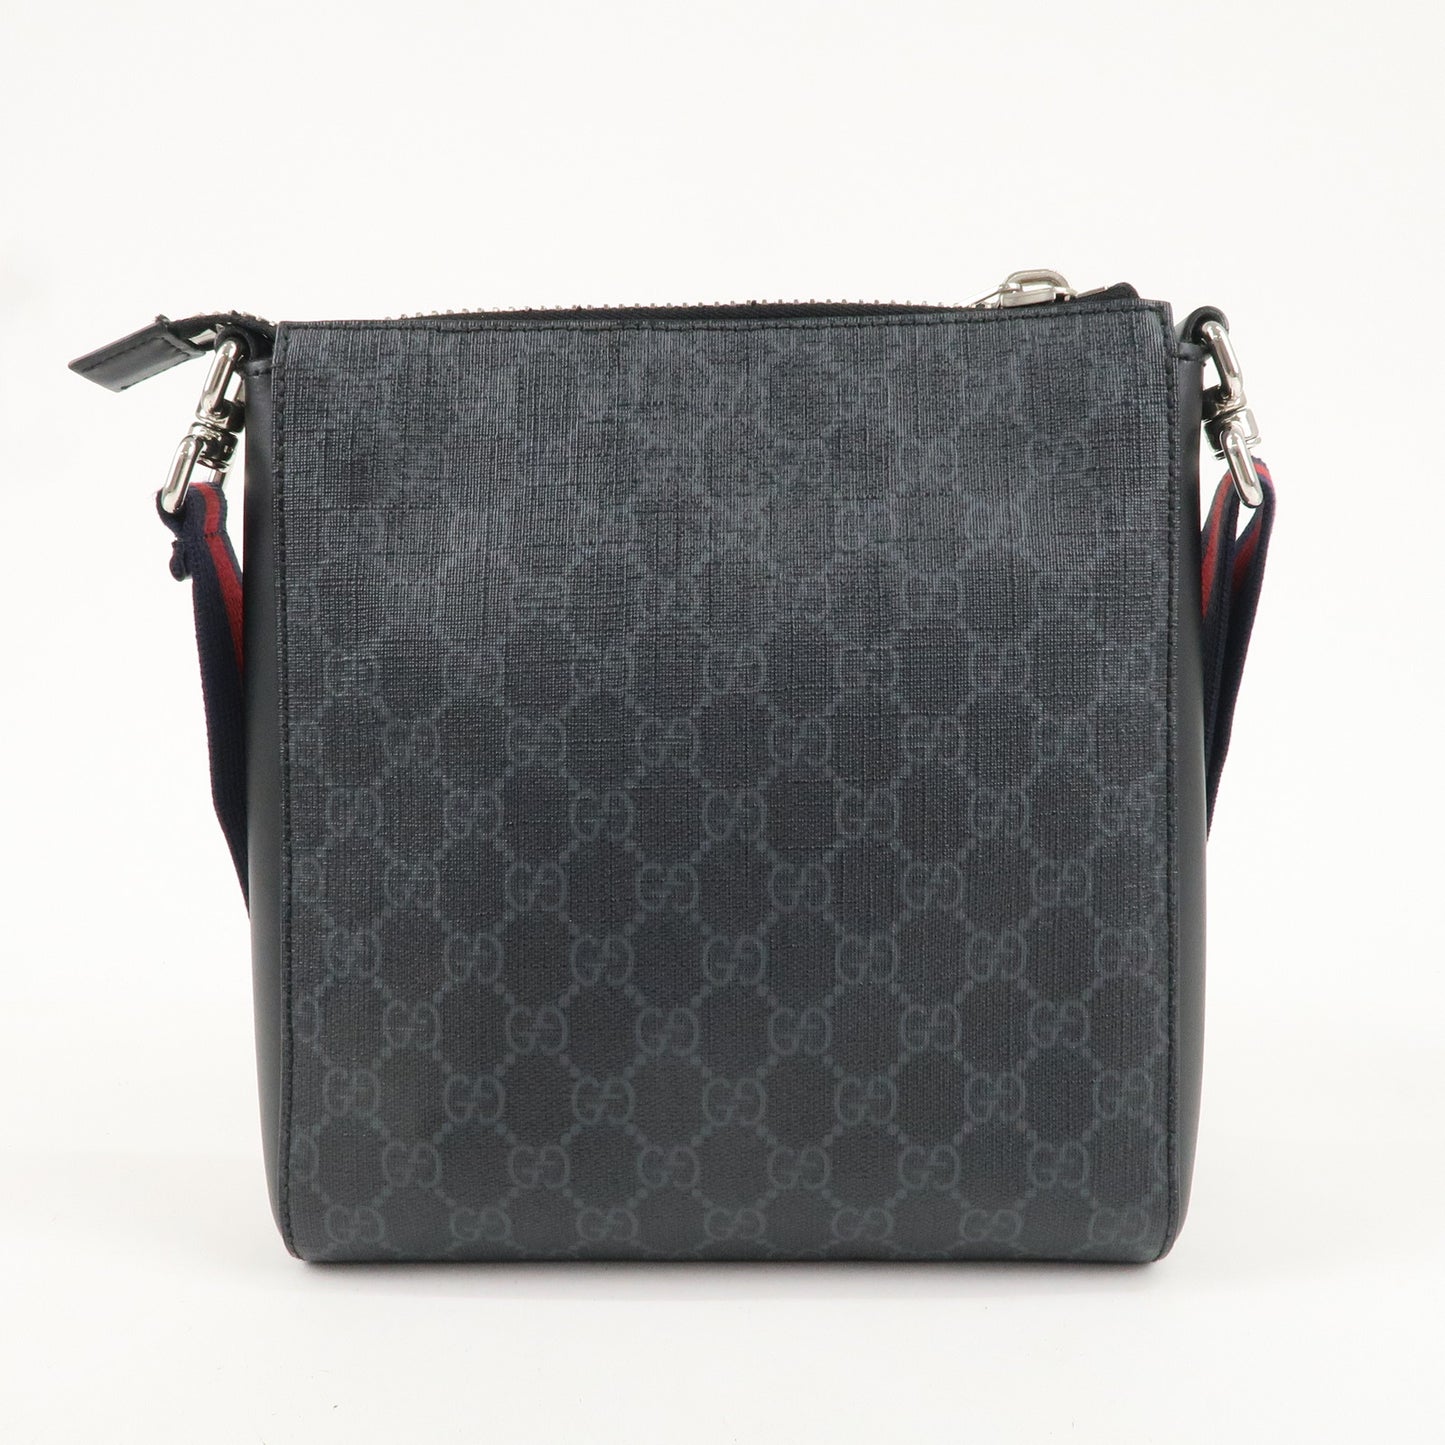 GUCCI GG Supreme Leather Small Messenger Bag Black Gray 523599